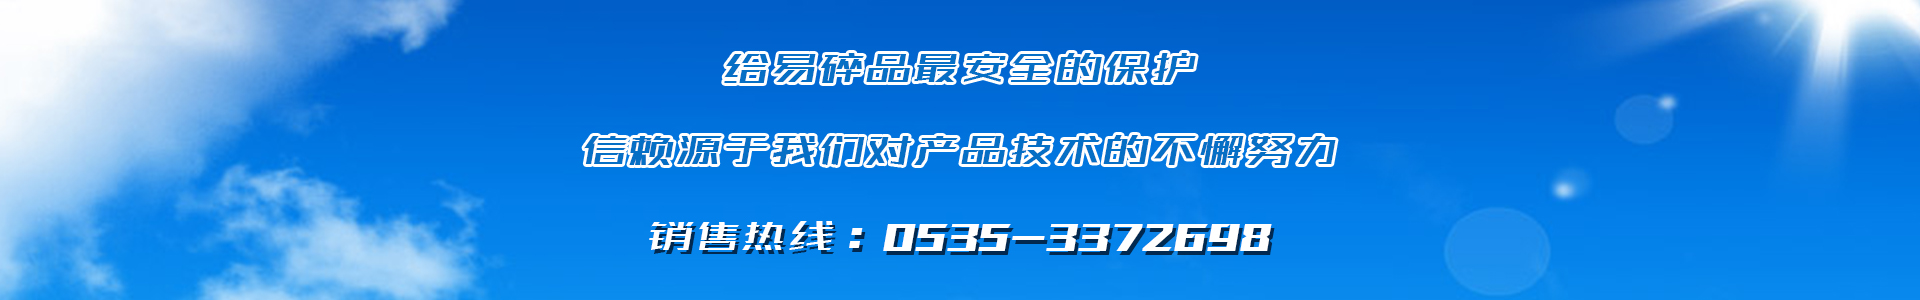 http://www.ythengxiu.cn/data/upload/201911/20191111103643_530.jpg